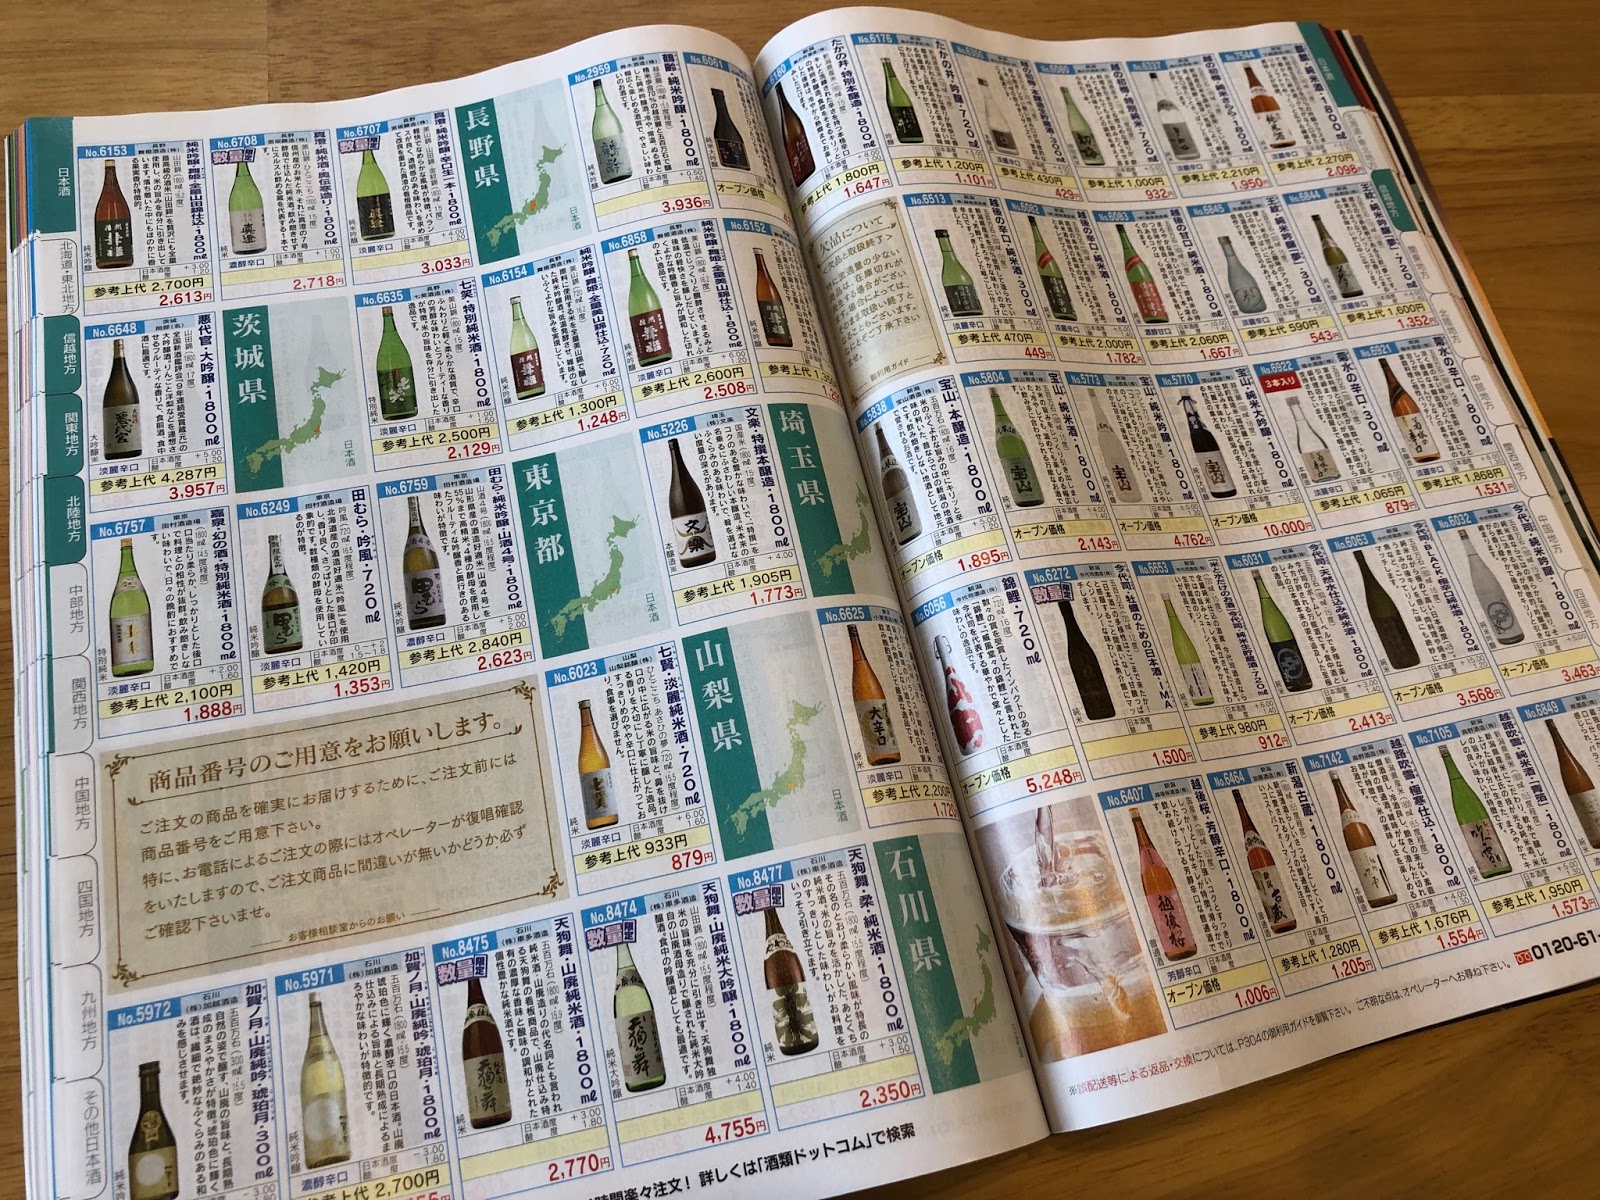 staff blog: 世界の酒類事典